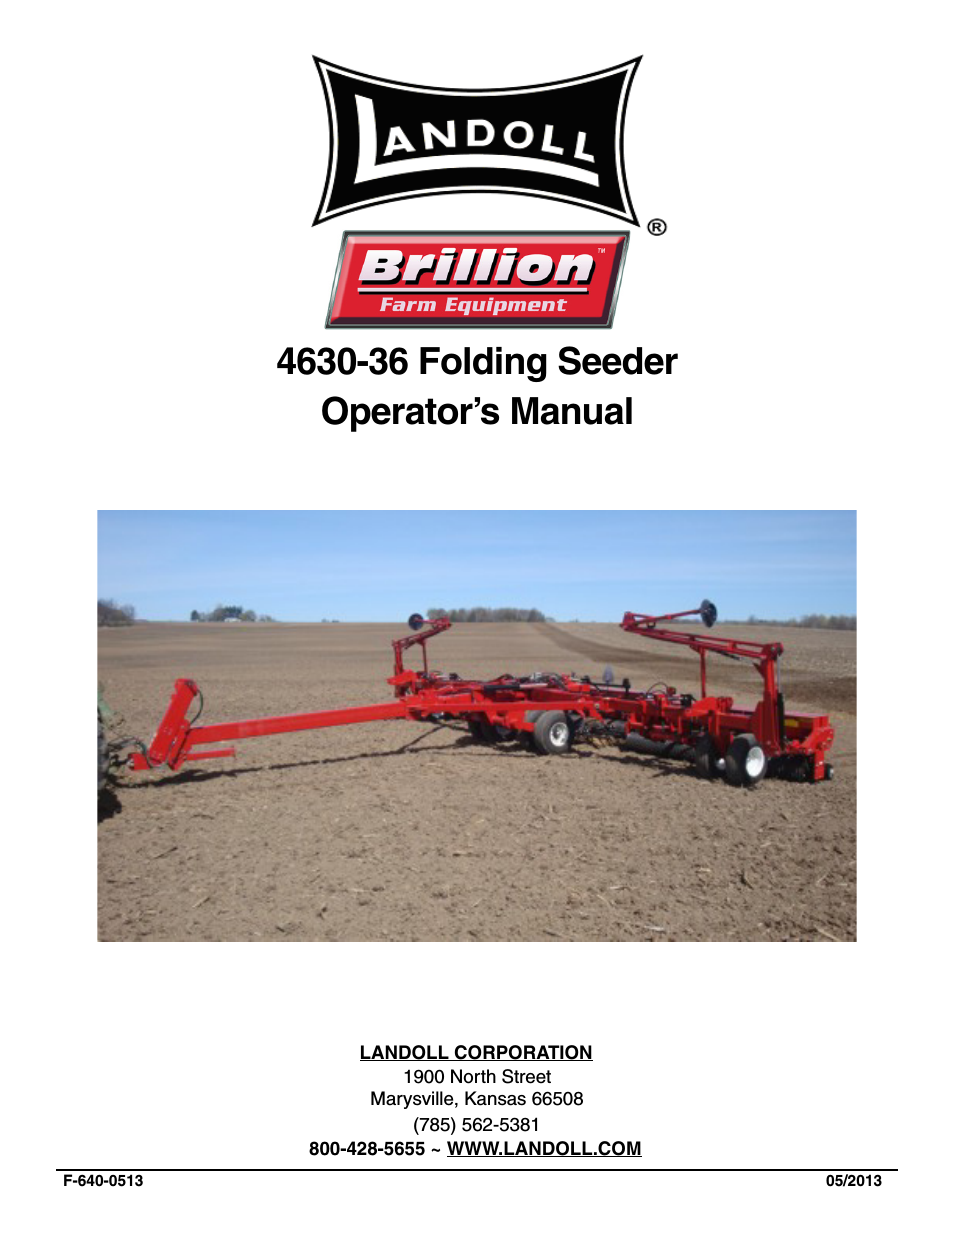 4630-36 Folding Seeder Operators Manual v.F-640-0513 05/2013